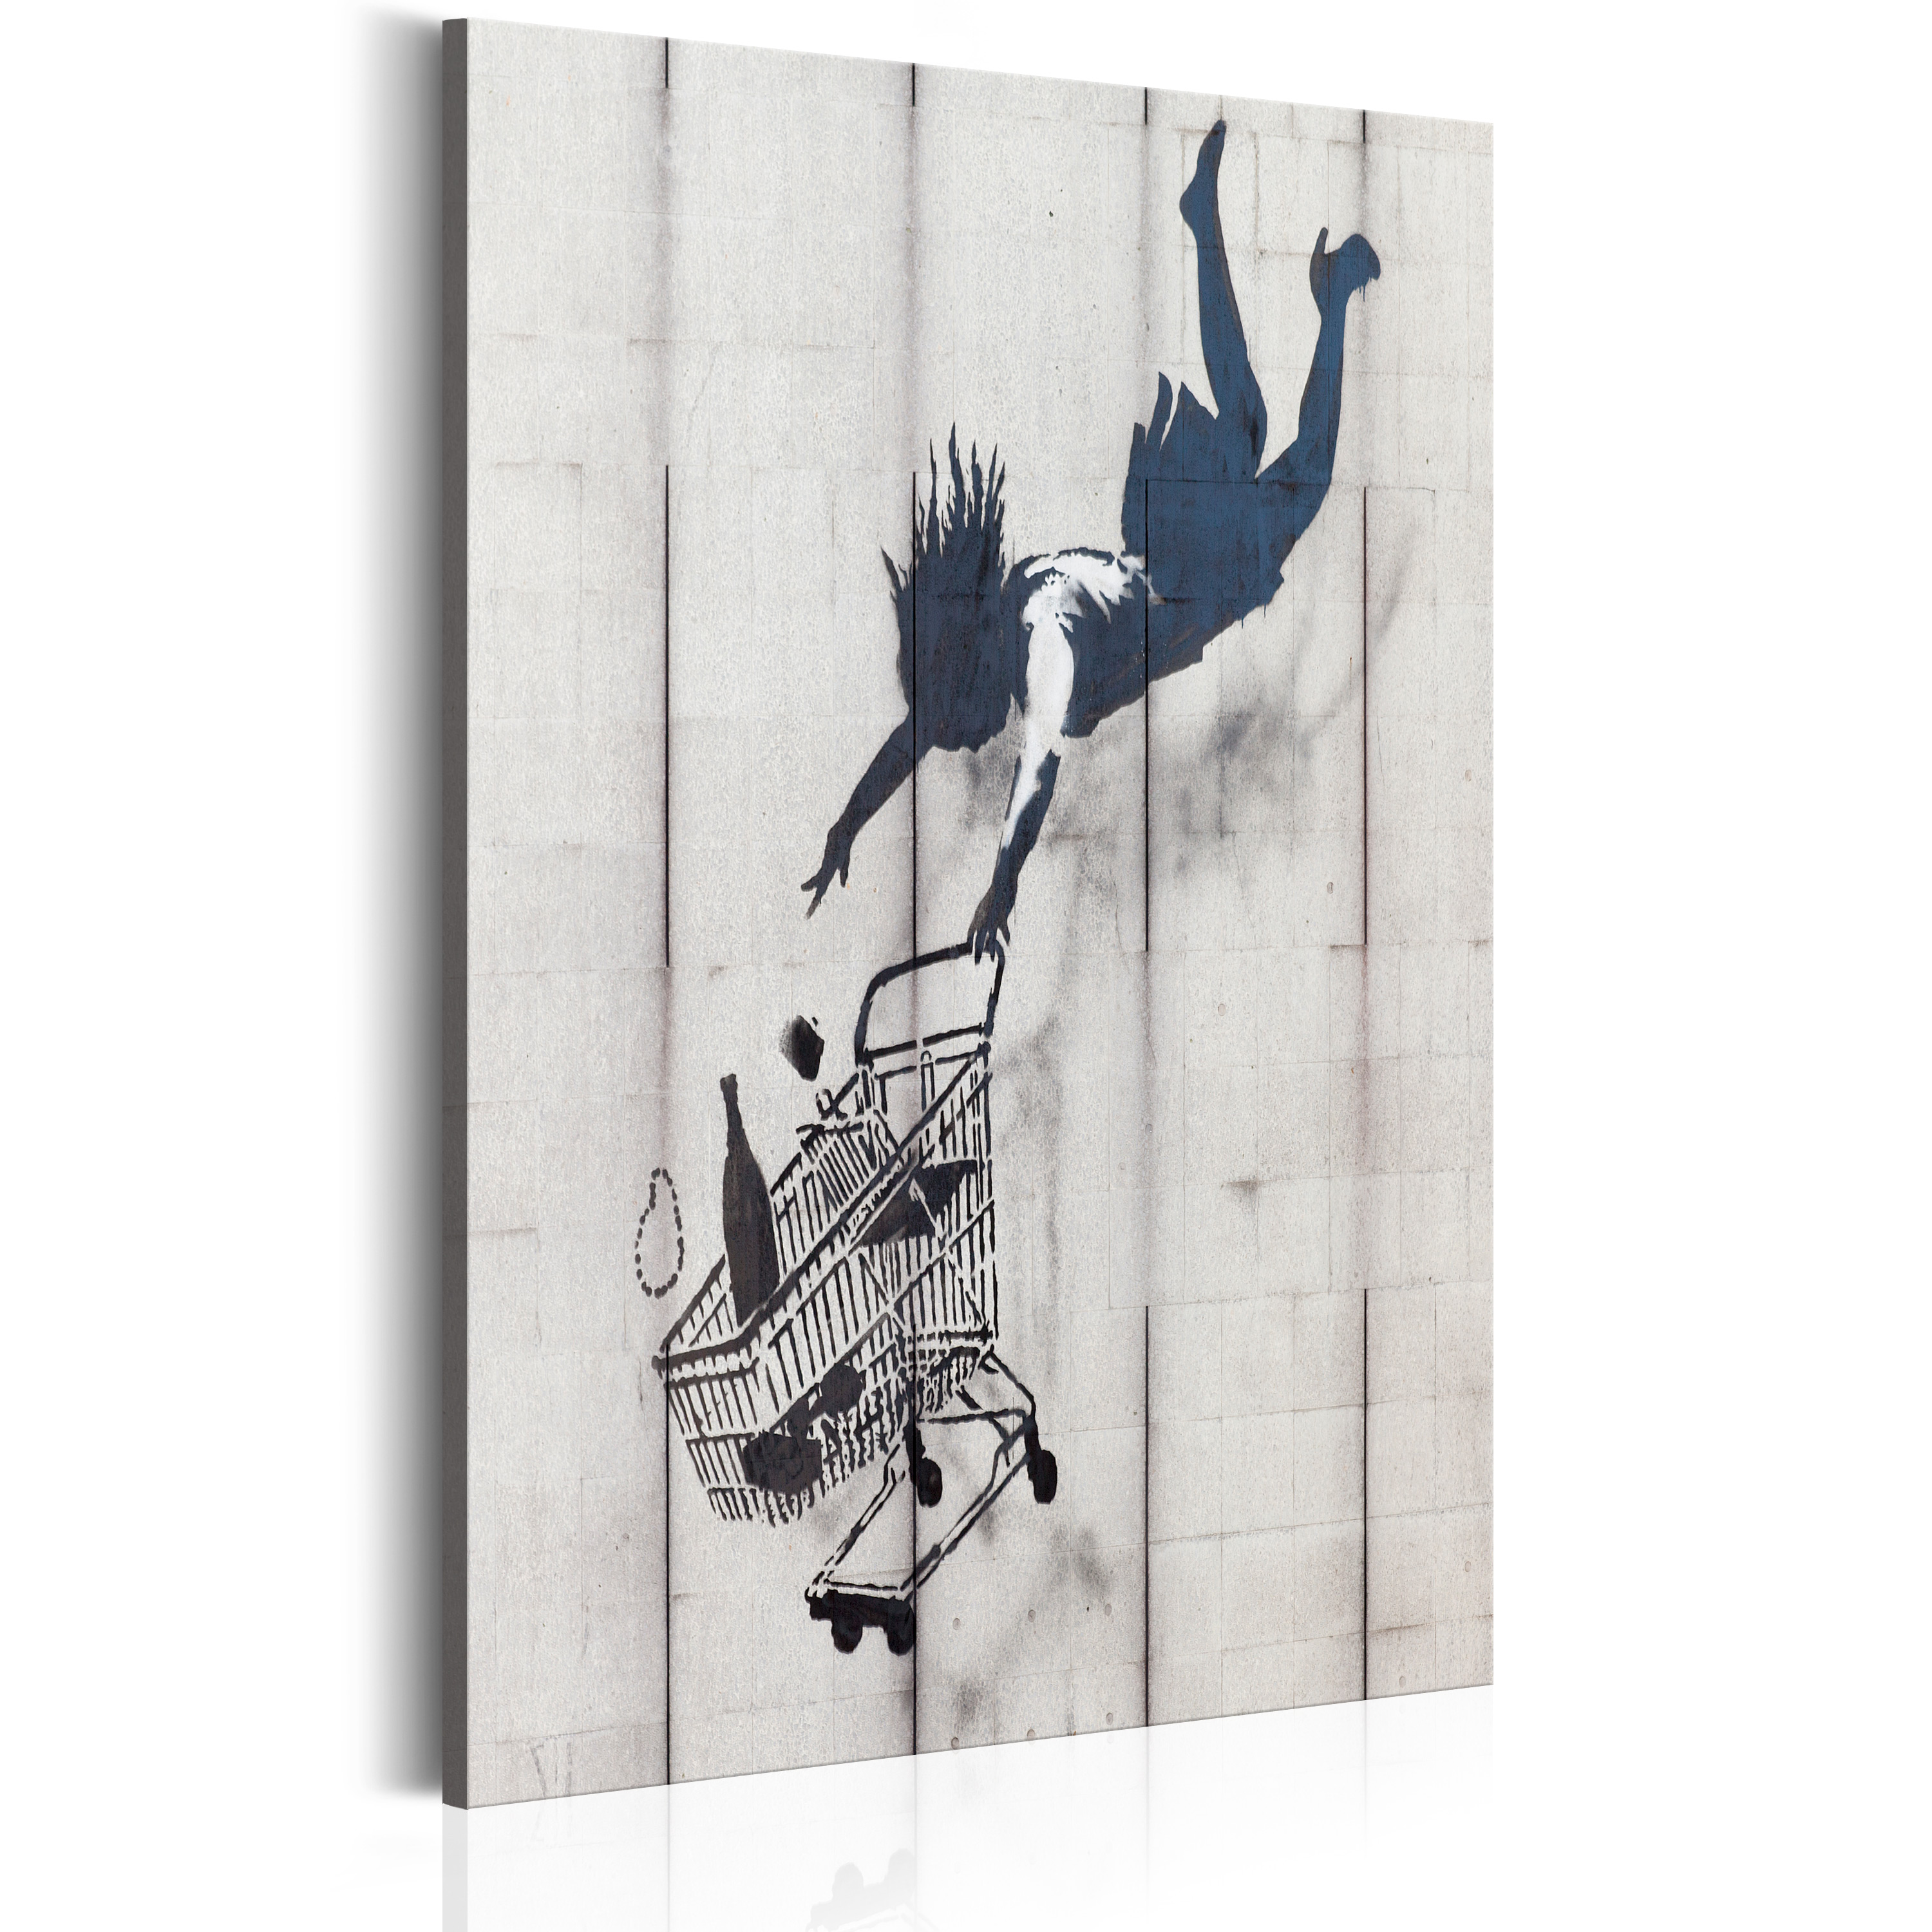 Canvas Print - Shop Til You Drop by Banksy - 60x90